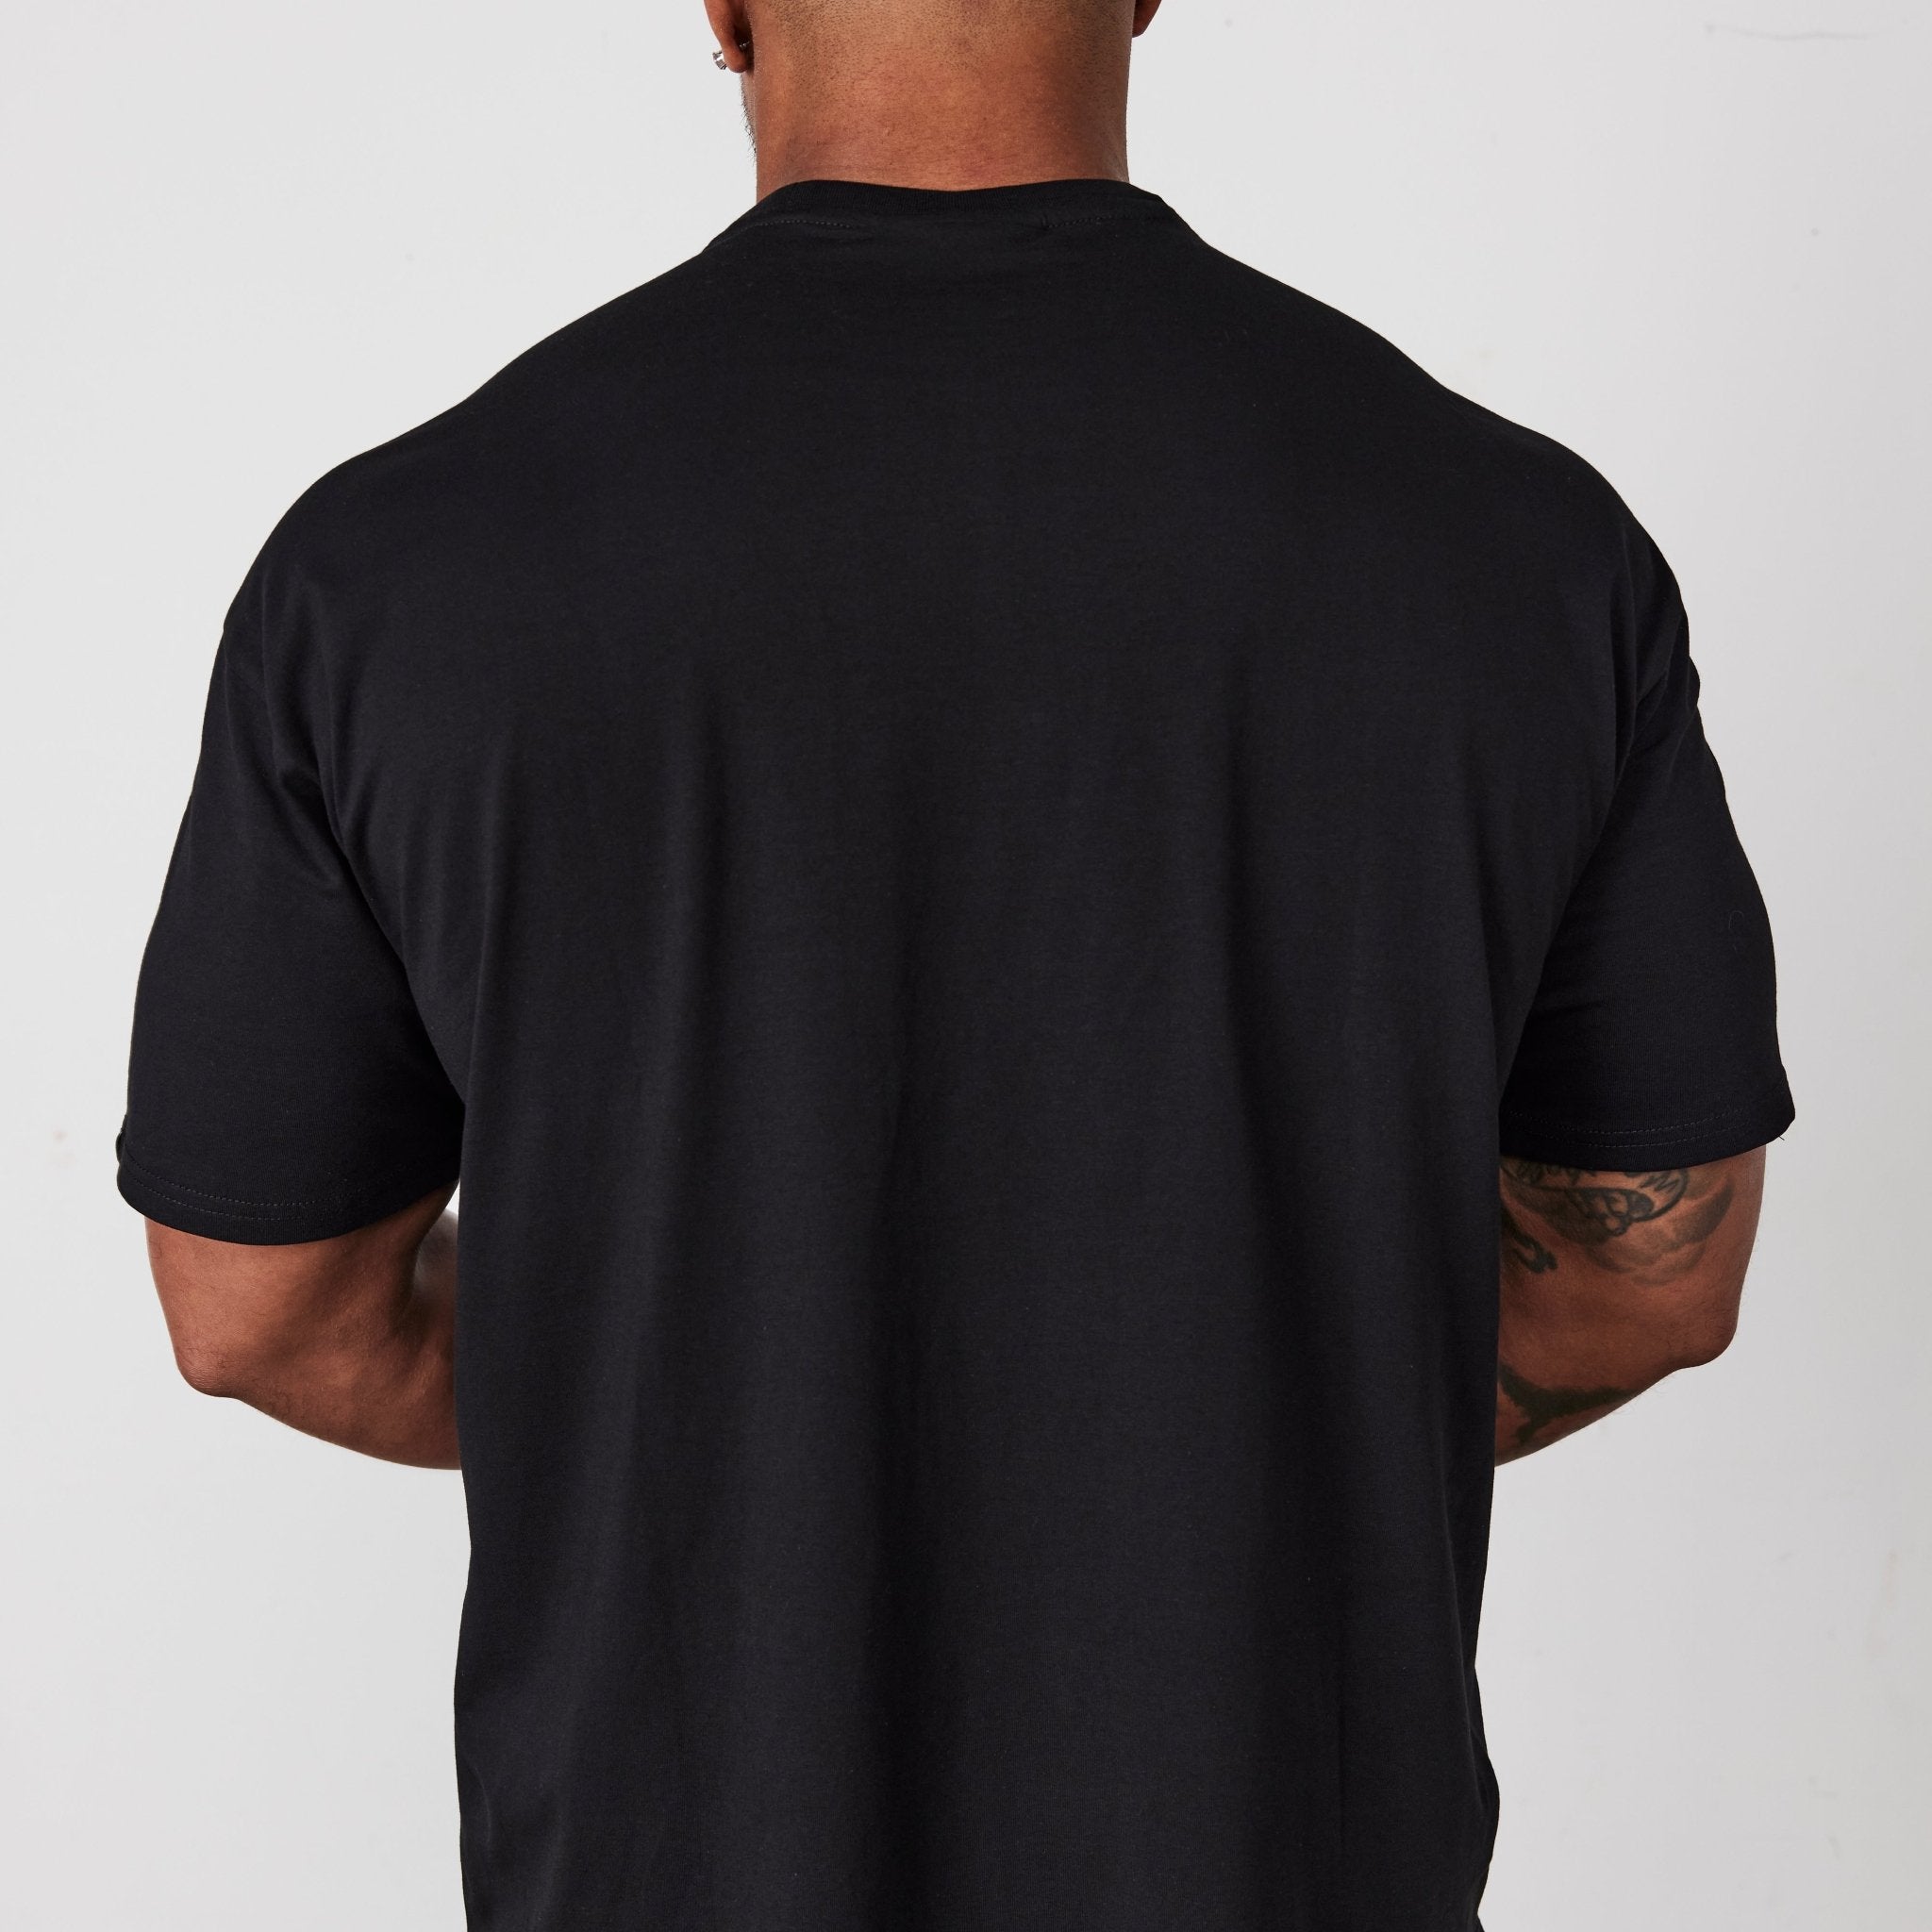 Vanquish Essential Black Oversized T Shirt - Vanquish Fitness